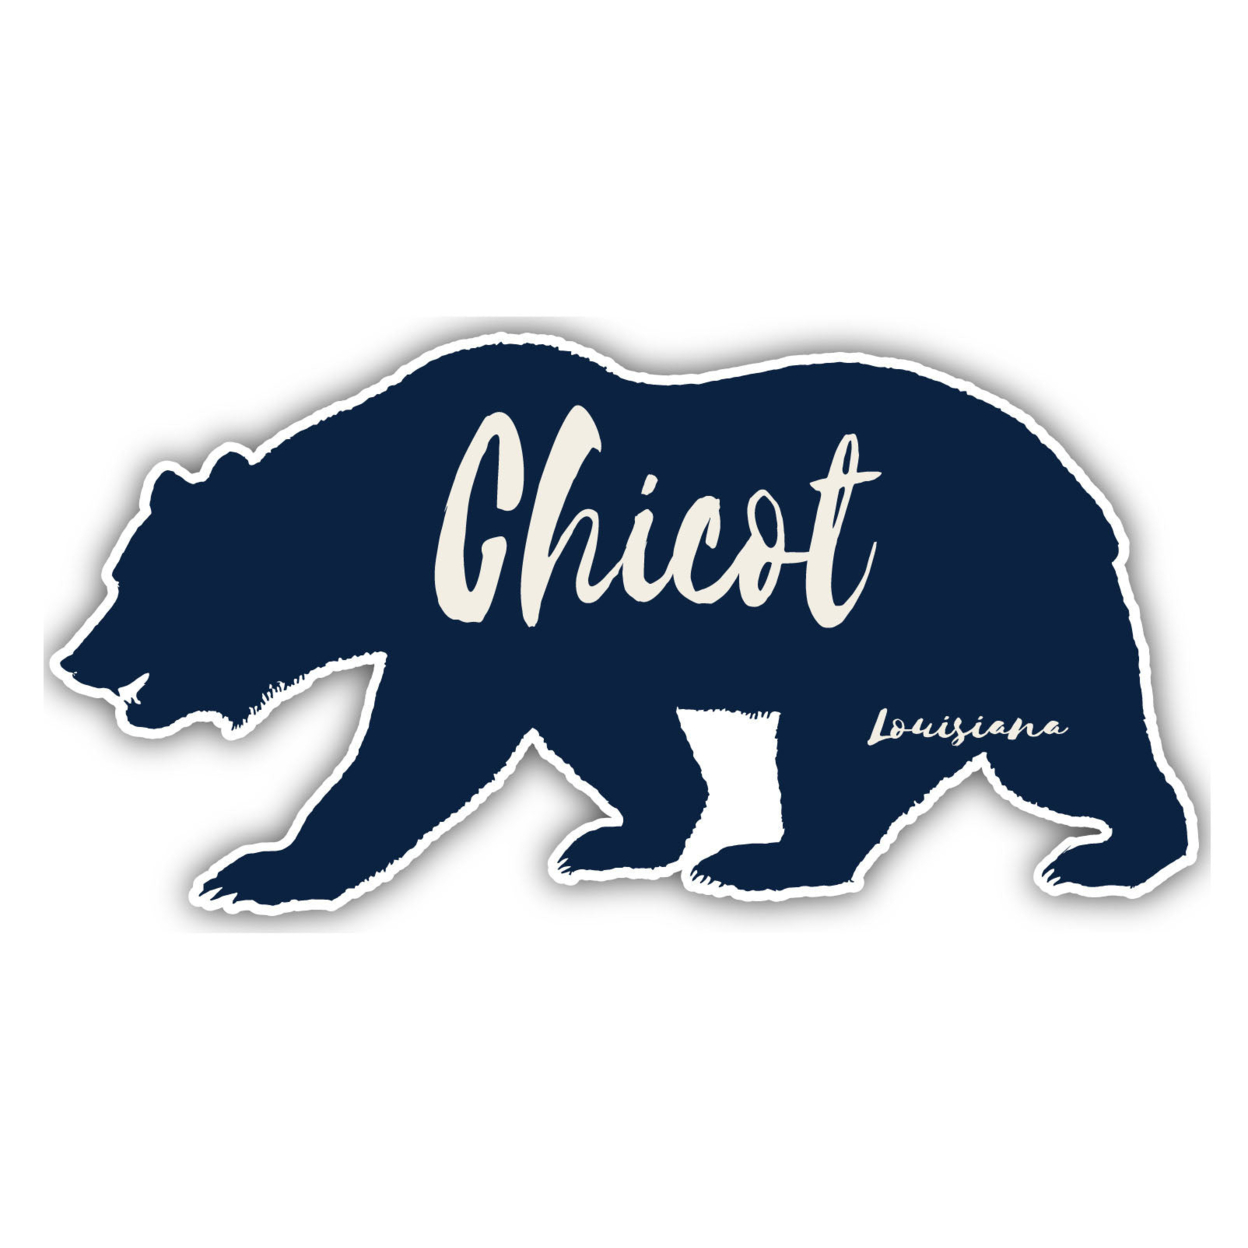 Chicot Louisiana Souvenir Decorative Stickers (Choose Theme And Size) - Single Unit, 8-Inch, Bear